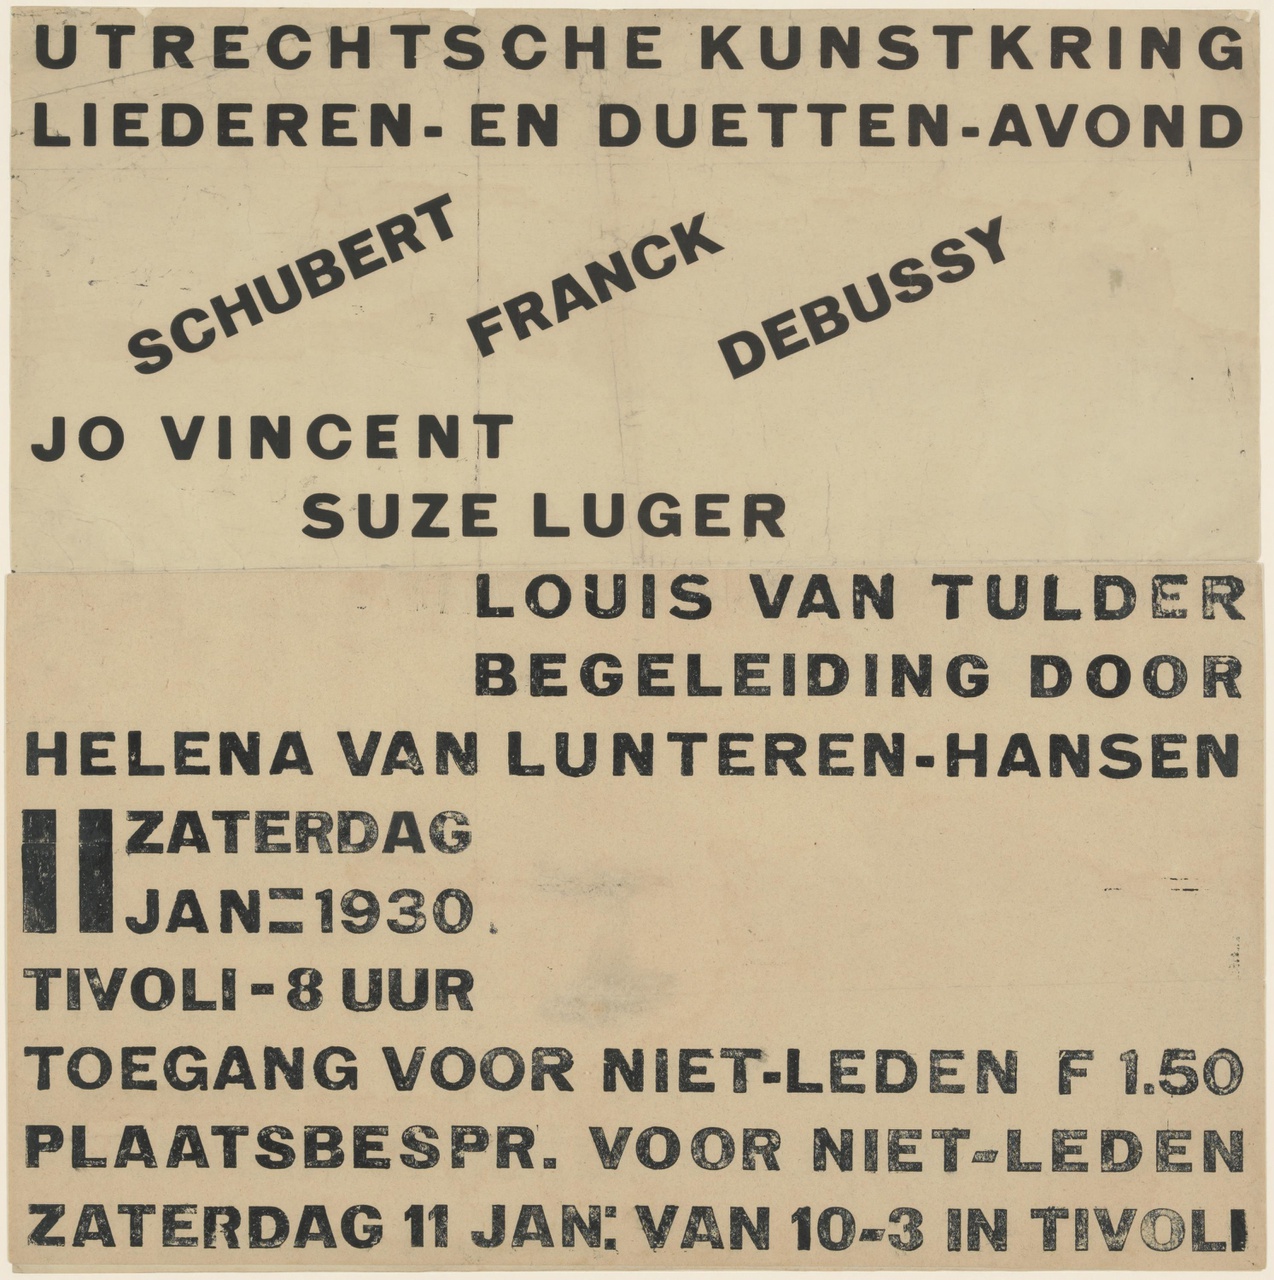 Affiche 'Utrechtsche Kunstkring liederen- en duettenavond'